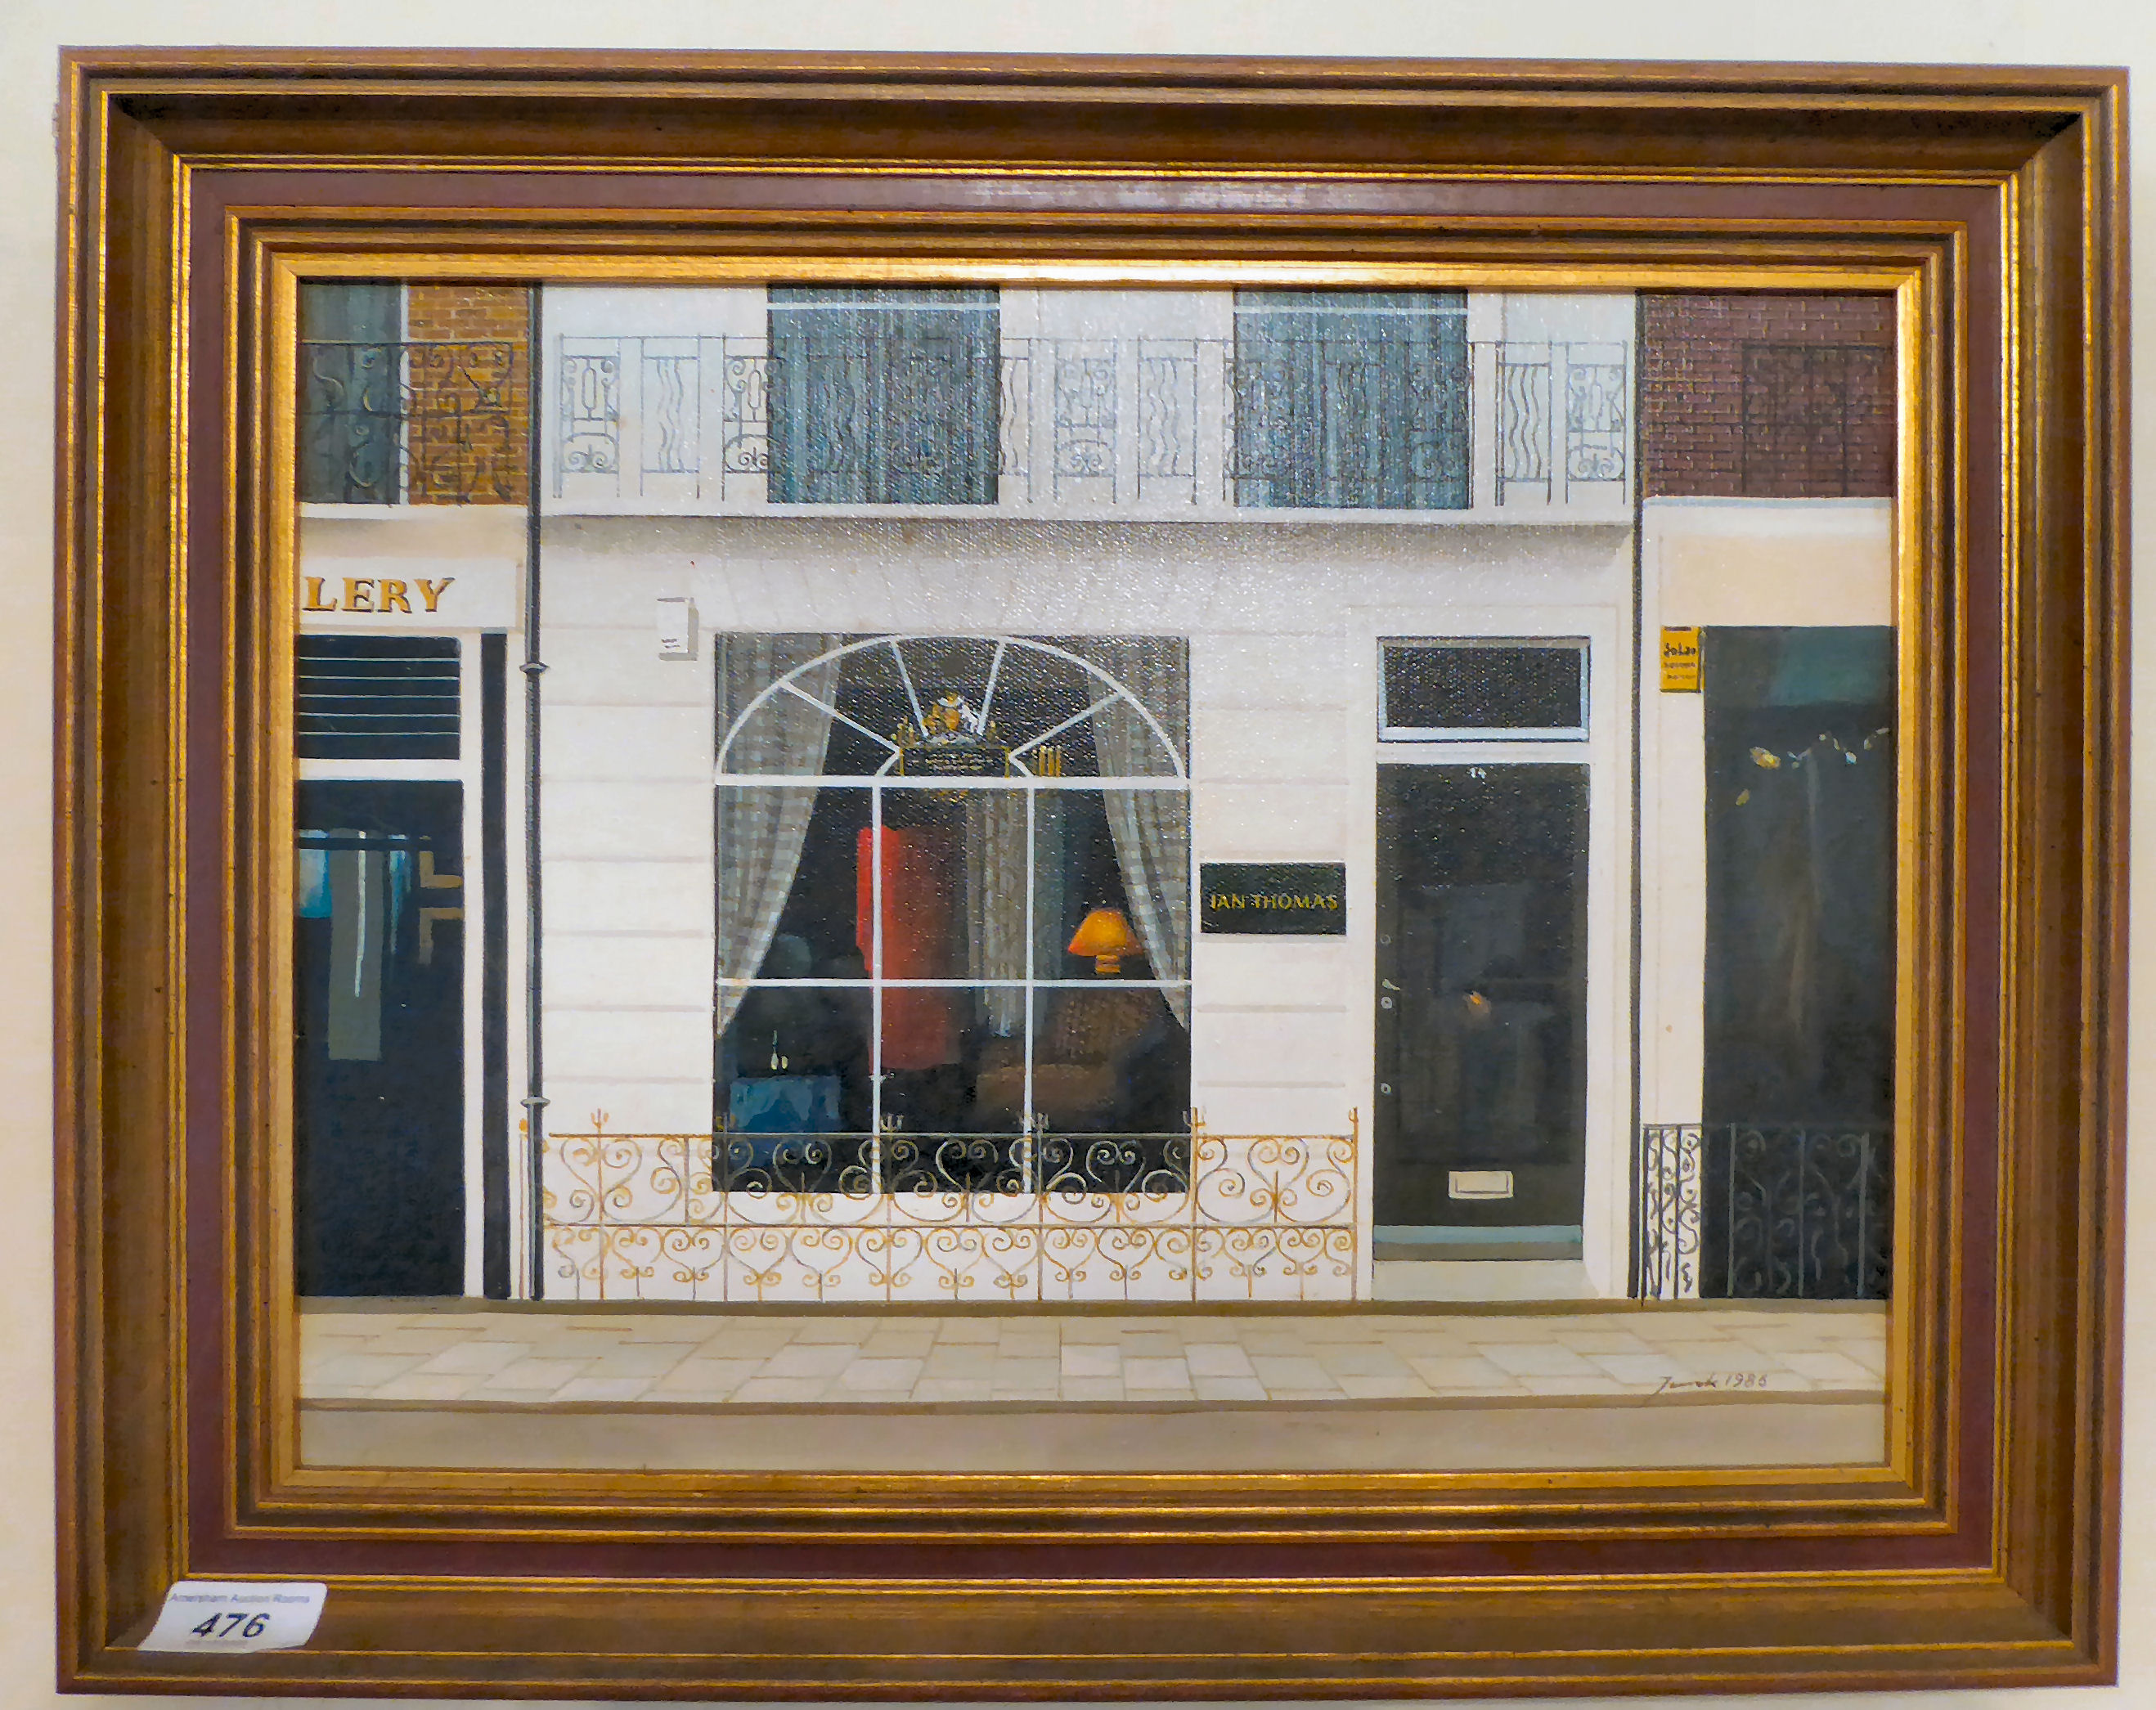 Jarek - No. 99 Motcombe Street, Ian Thomas' Shop oil on canvas bears a signature & dated 1986 15.